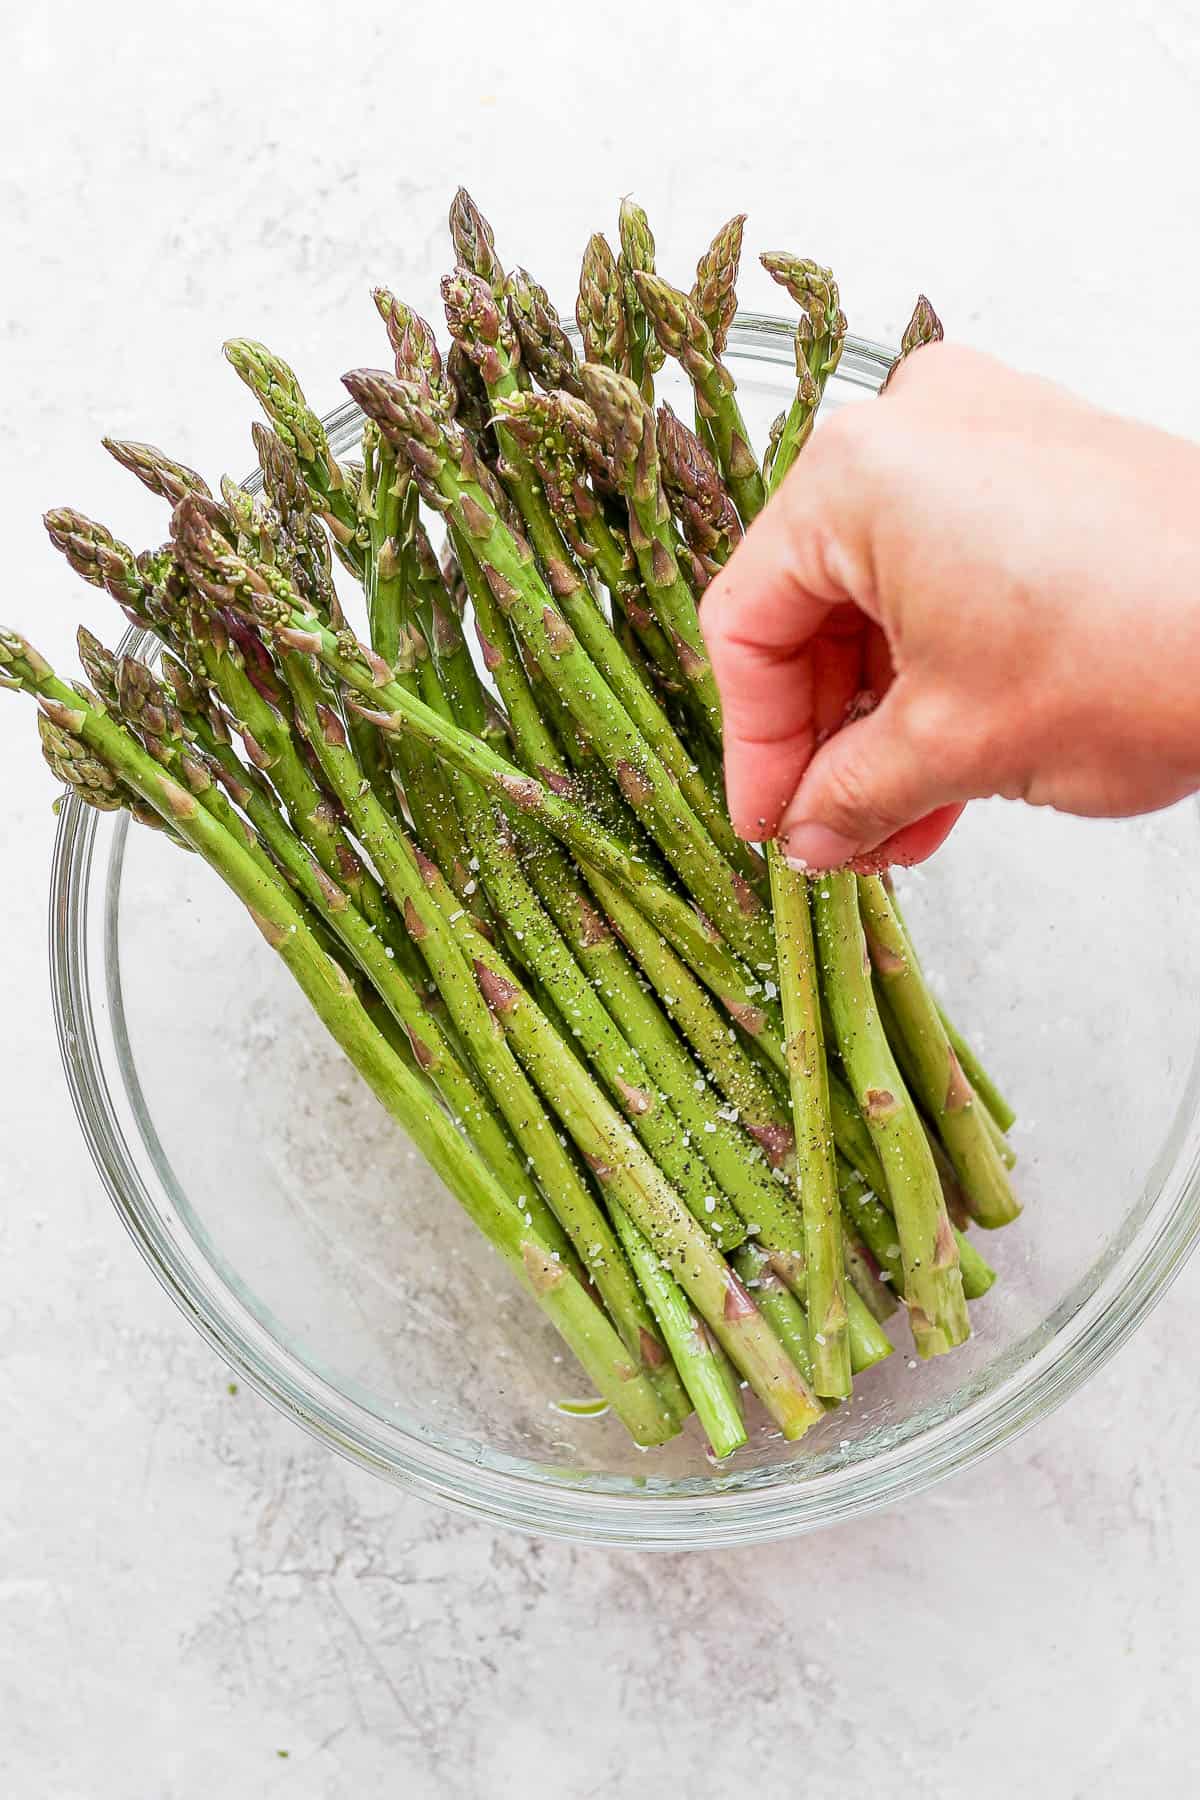 Hand seasoning asparagus before grilling